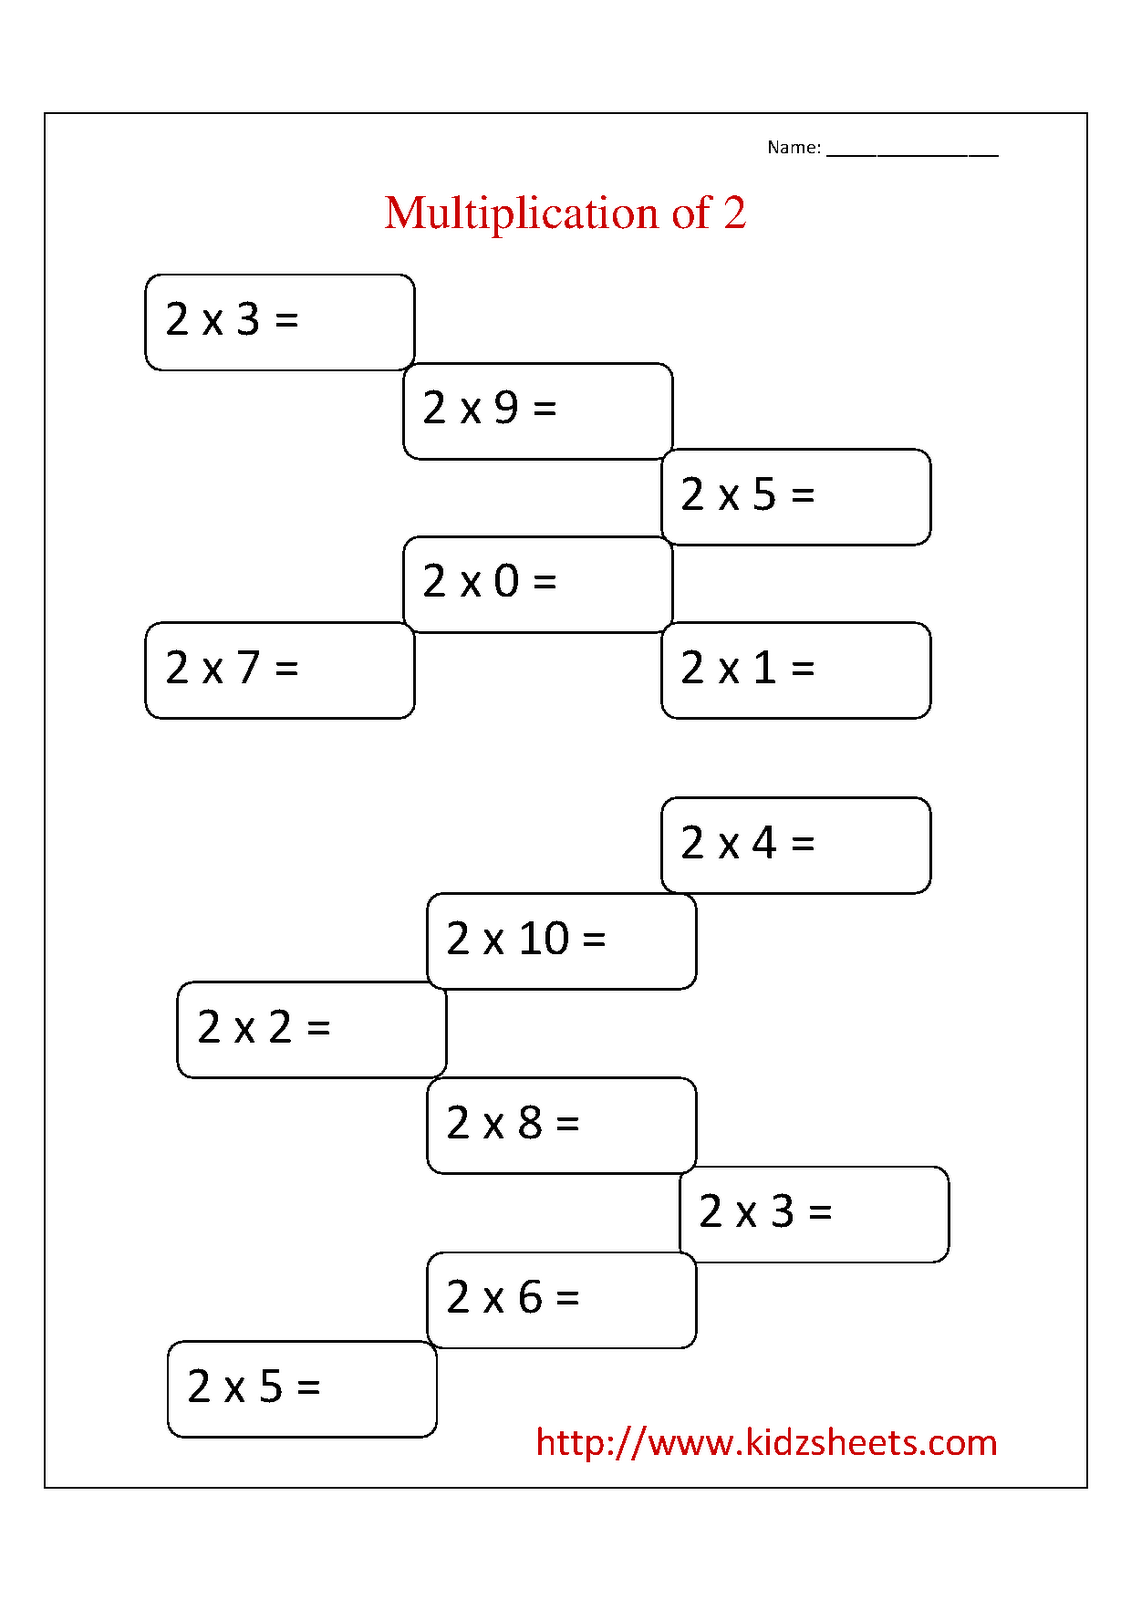 Kidz Worksheets: Second Grade Multiplication Table 2